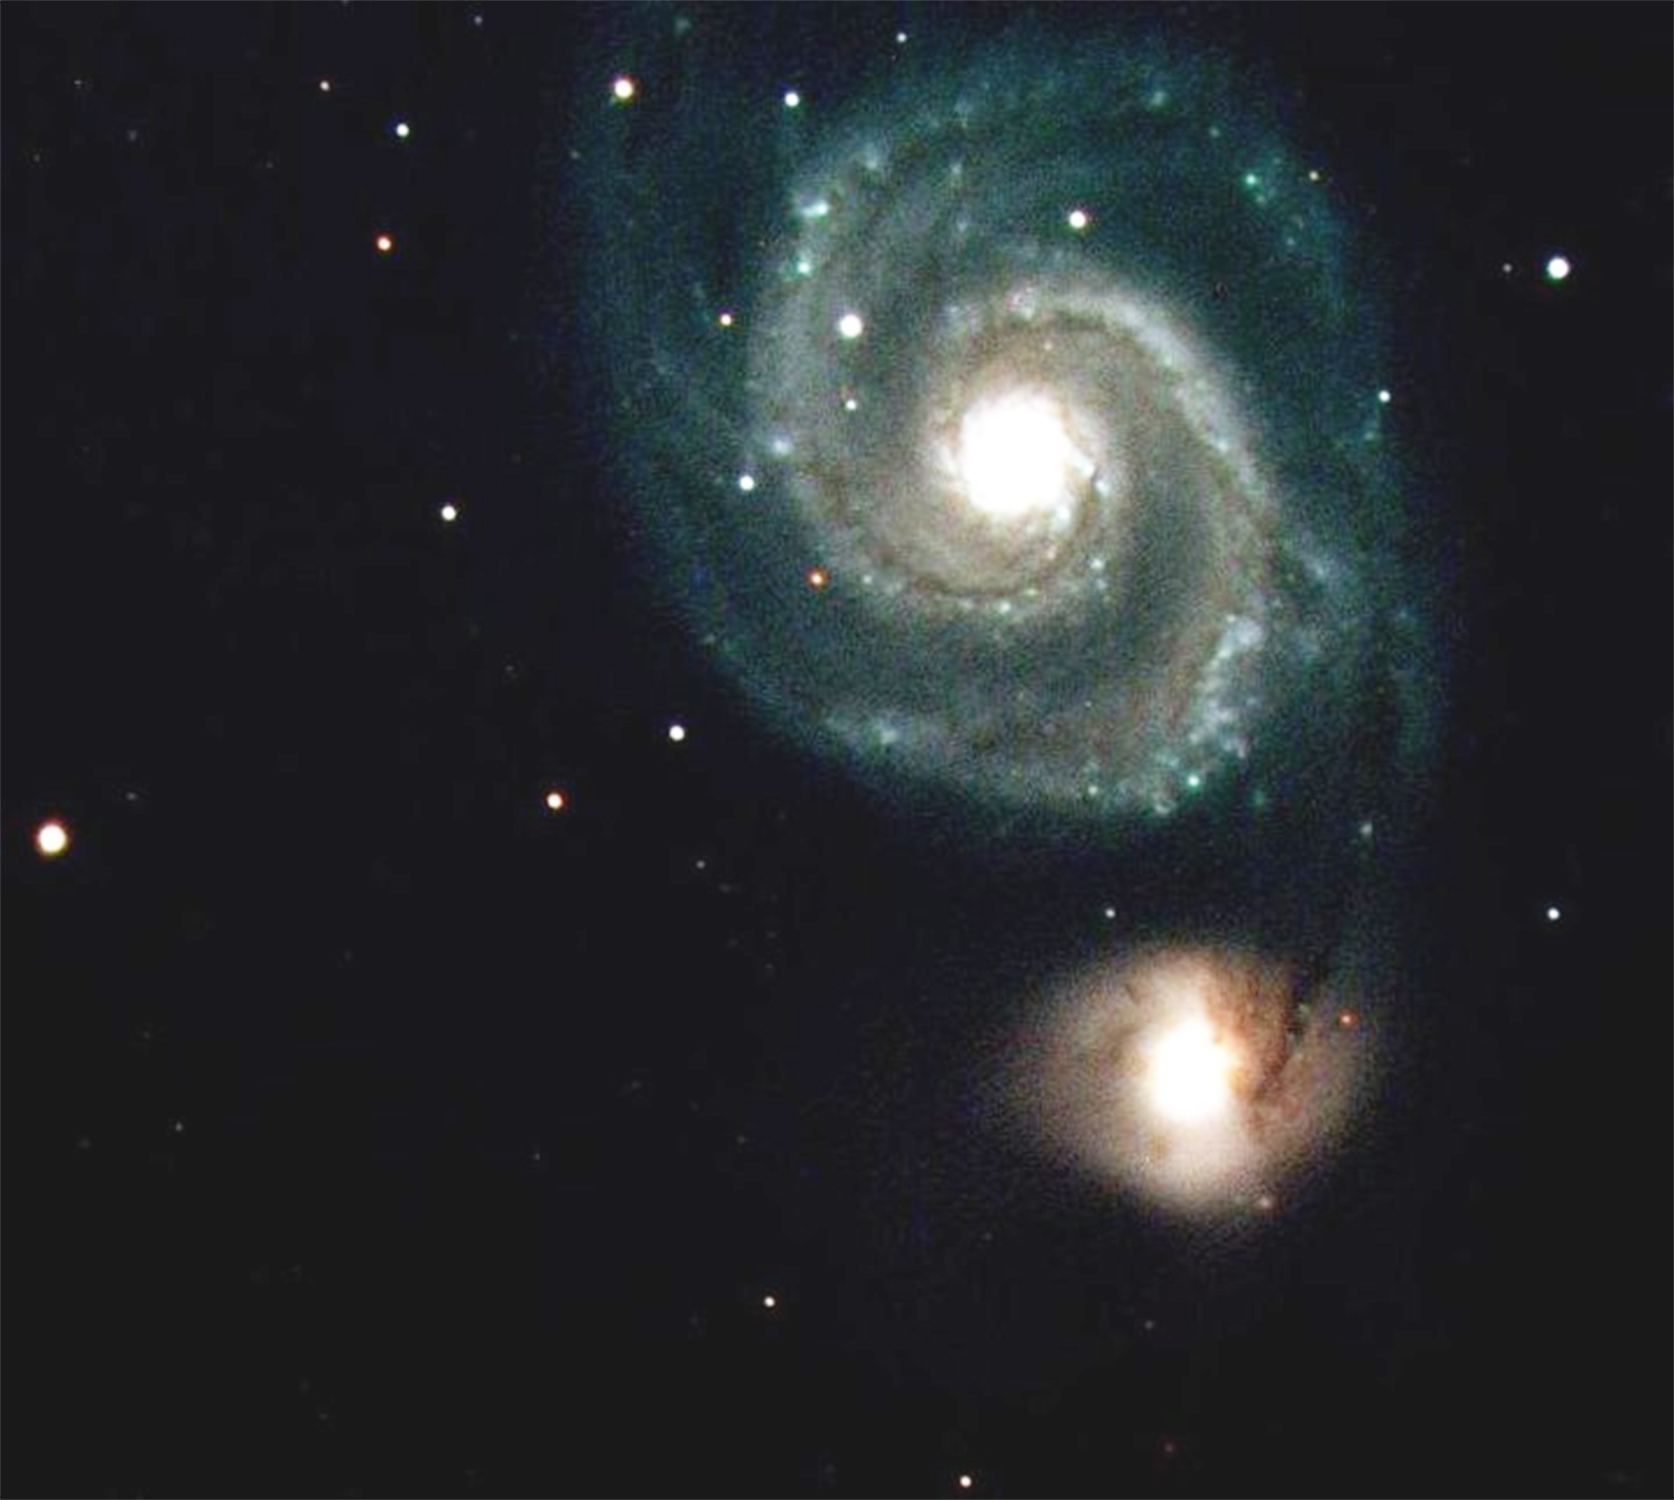 Whirlpool Galaxy (Messier 51)